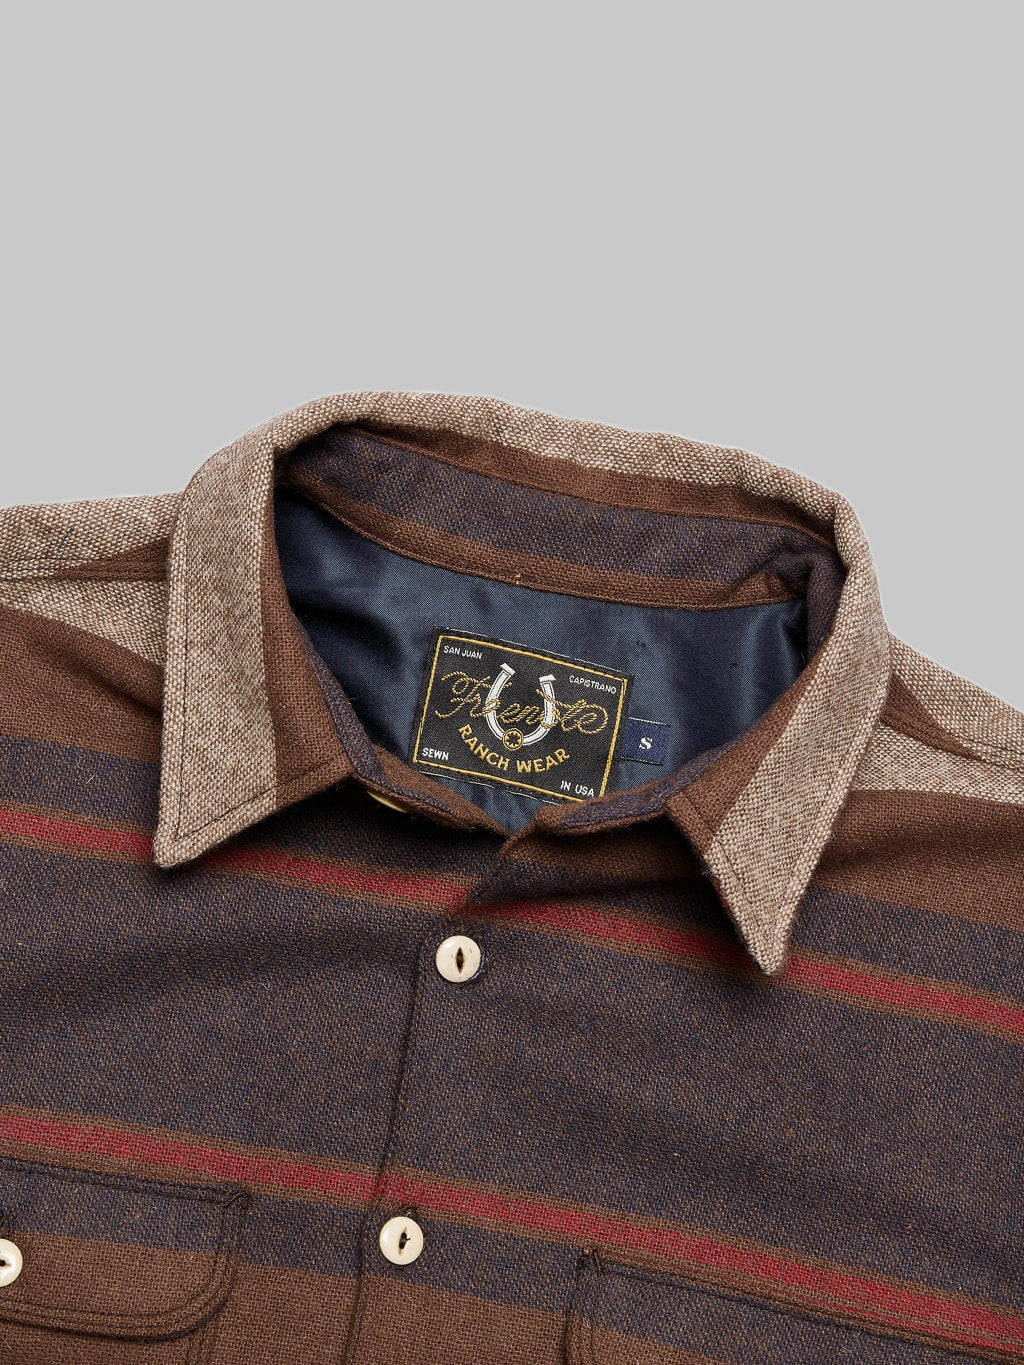 freenote cloth benson brown stripe classic wool overshirt collar button